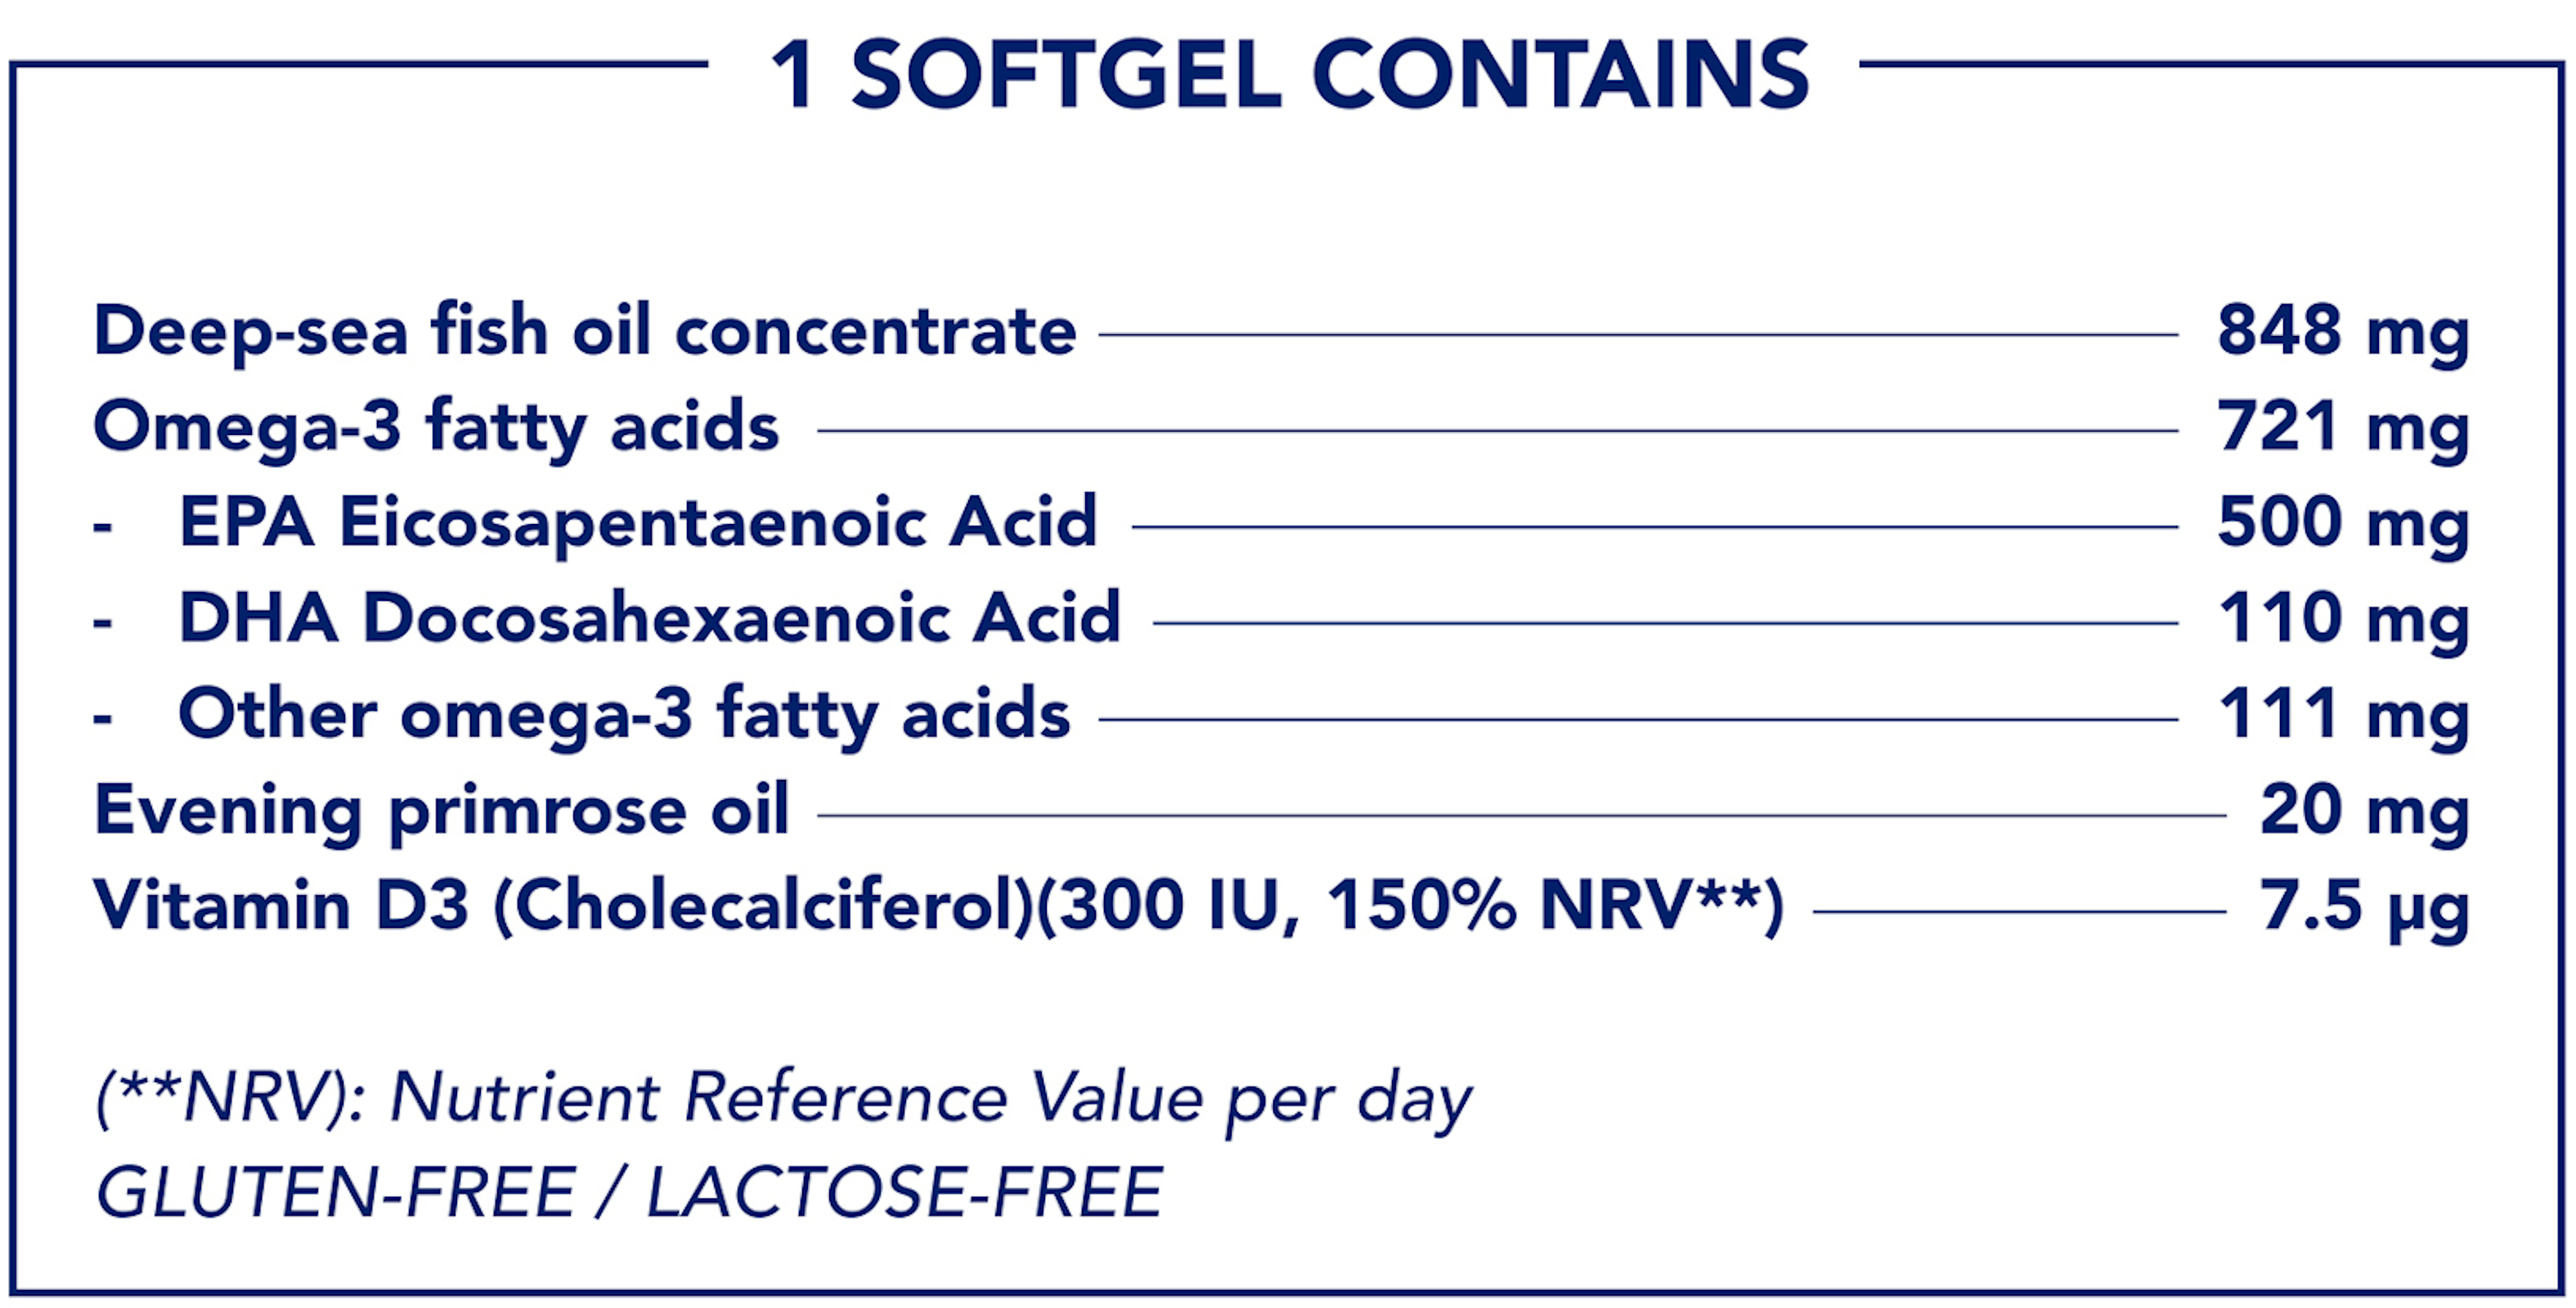 1 SOFTGEL CONTAINSDeep-sea fish oil concentrate, 848 mgOmega-3 fatty acids, 721 mgEPA Eicosapentaenoic Acid, 500 mgDHA Docosahexaenoic Acid, 110 mgOther omega-3 fatty acids, 111 mgEvening primrose oil, 20 mgVitamin D3 (Cholecalciferol) (300 IU, 150% NRV**), 7.5 µg(**NRV): Nutrient Reference Value per dayGLUTEN-FREE / LACTOSE-FREE